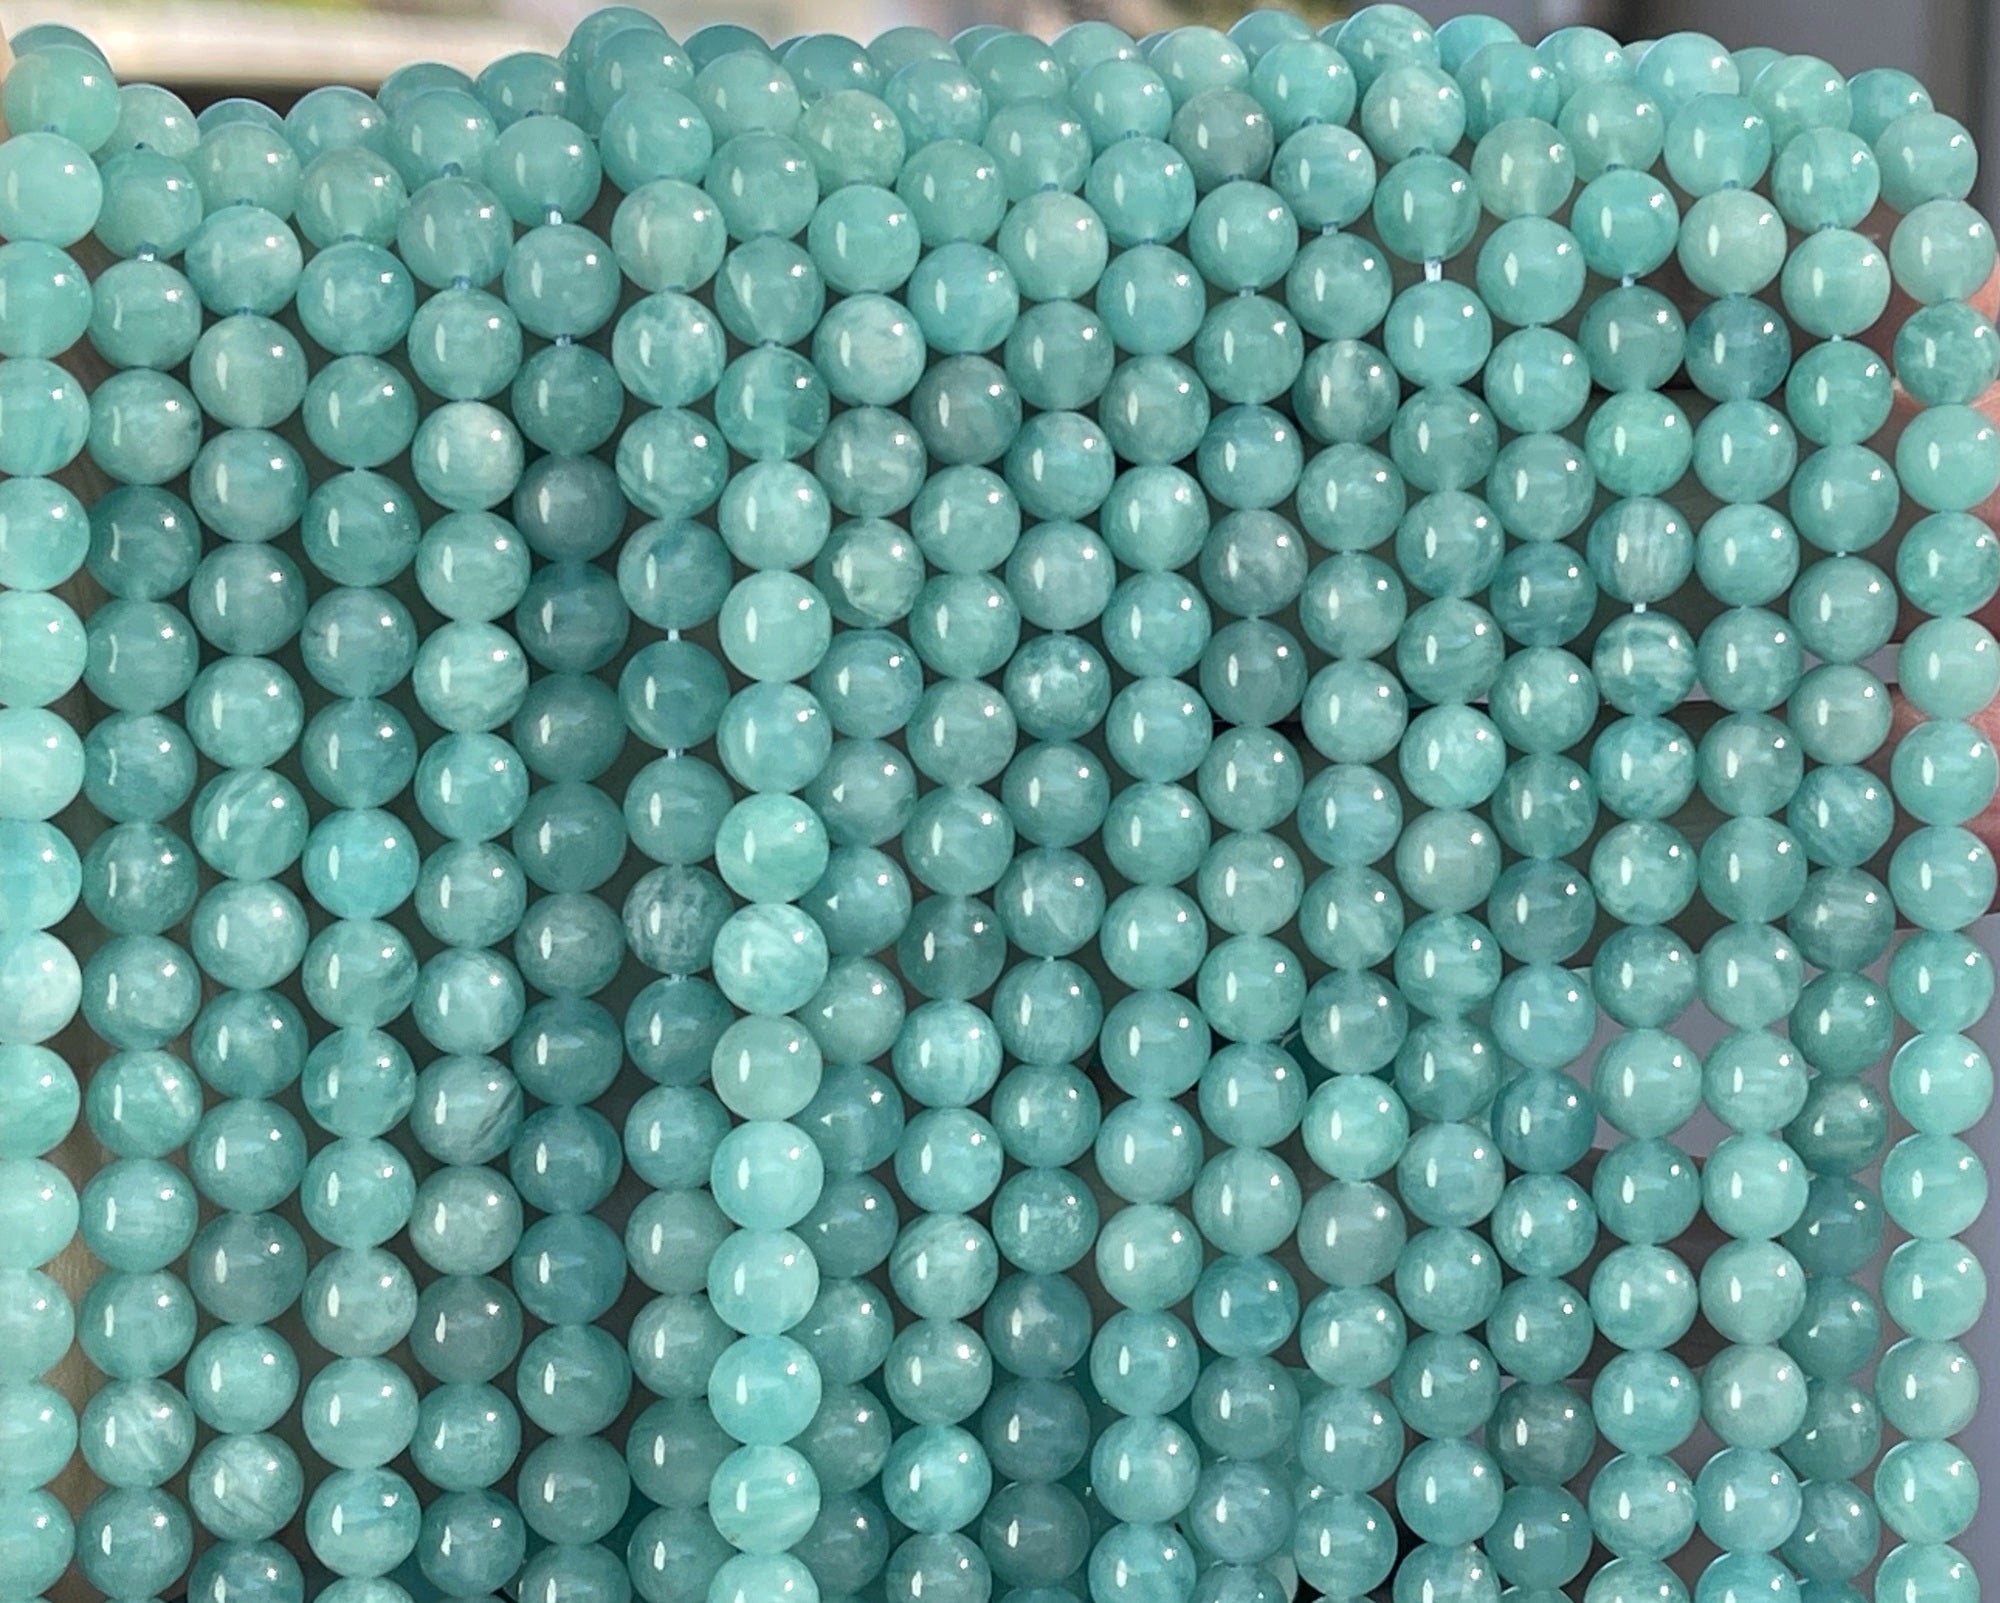 Mozambique Amazonite 6mm round natural gemstone beads 15.5" strand